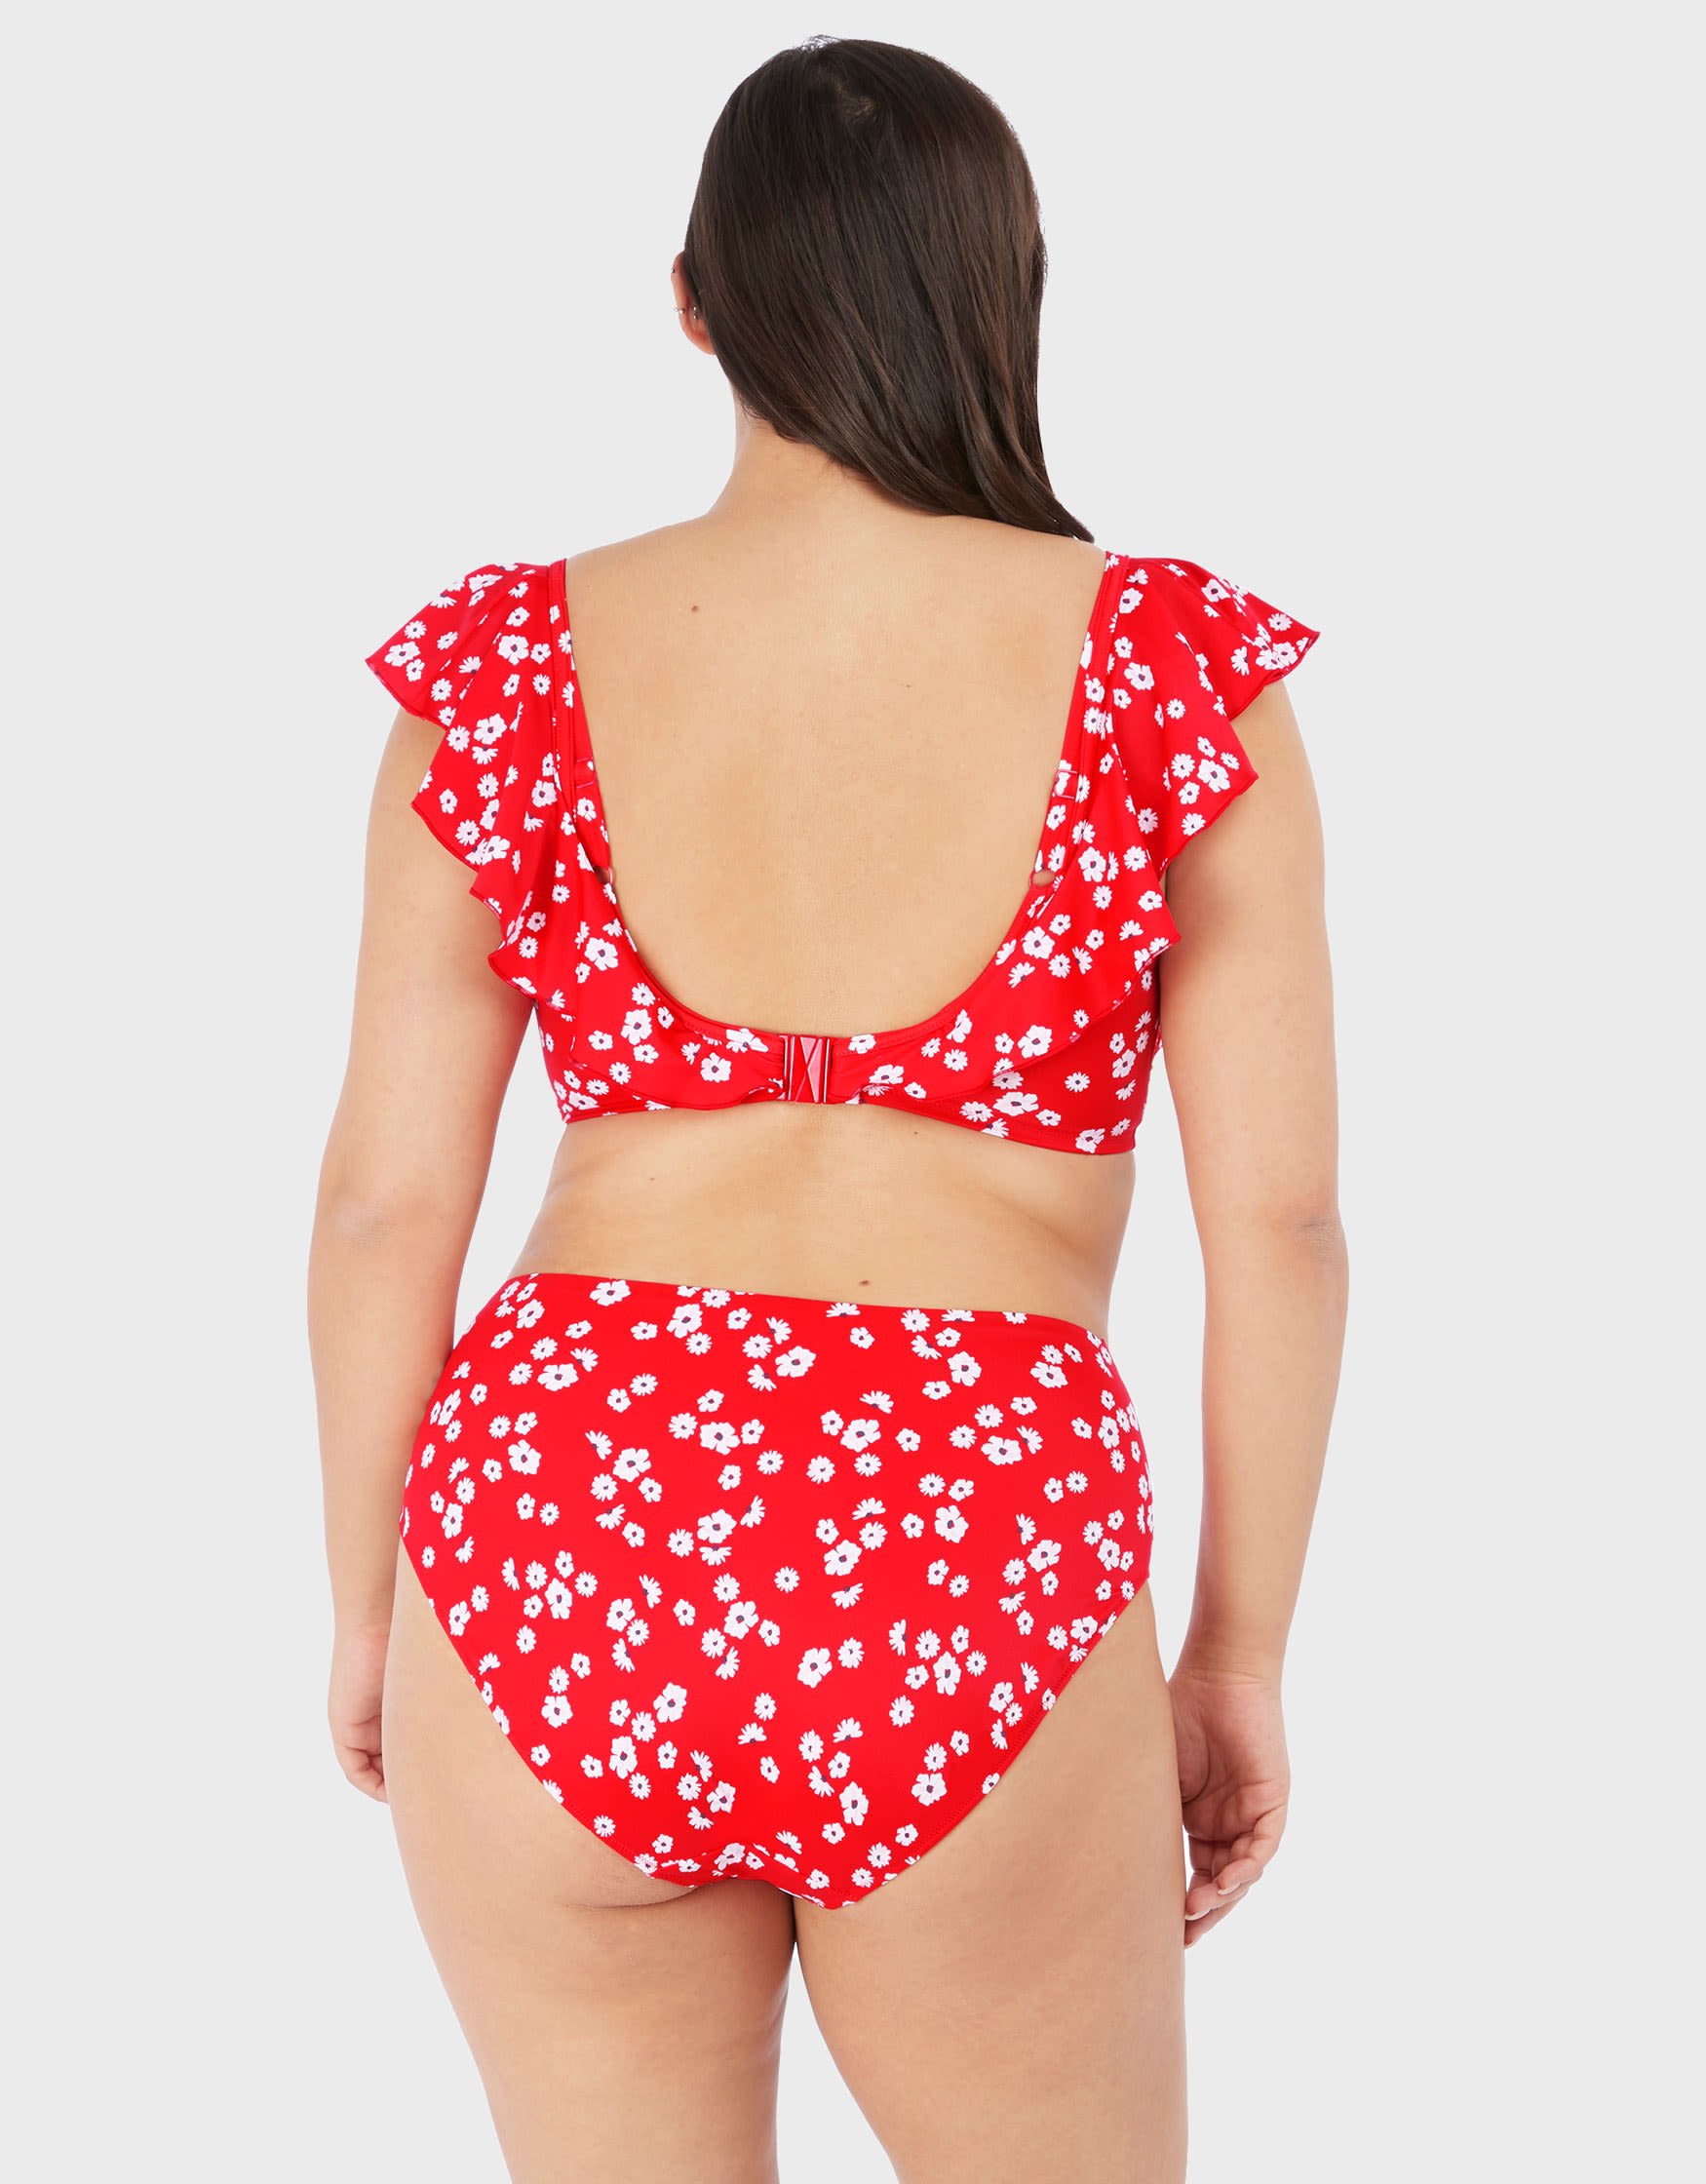 Plain Sailing Bikini Top by Elomi, Red Floral, Balconette Bikini